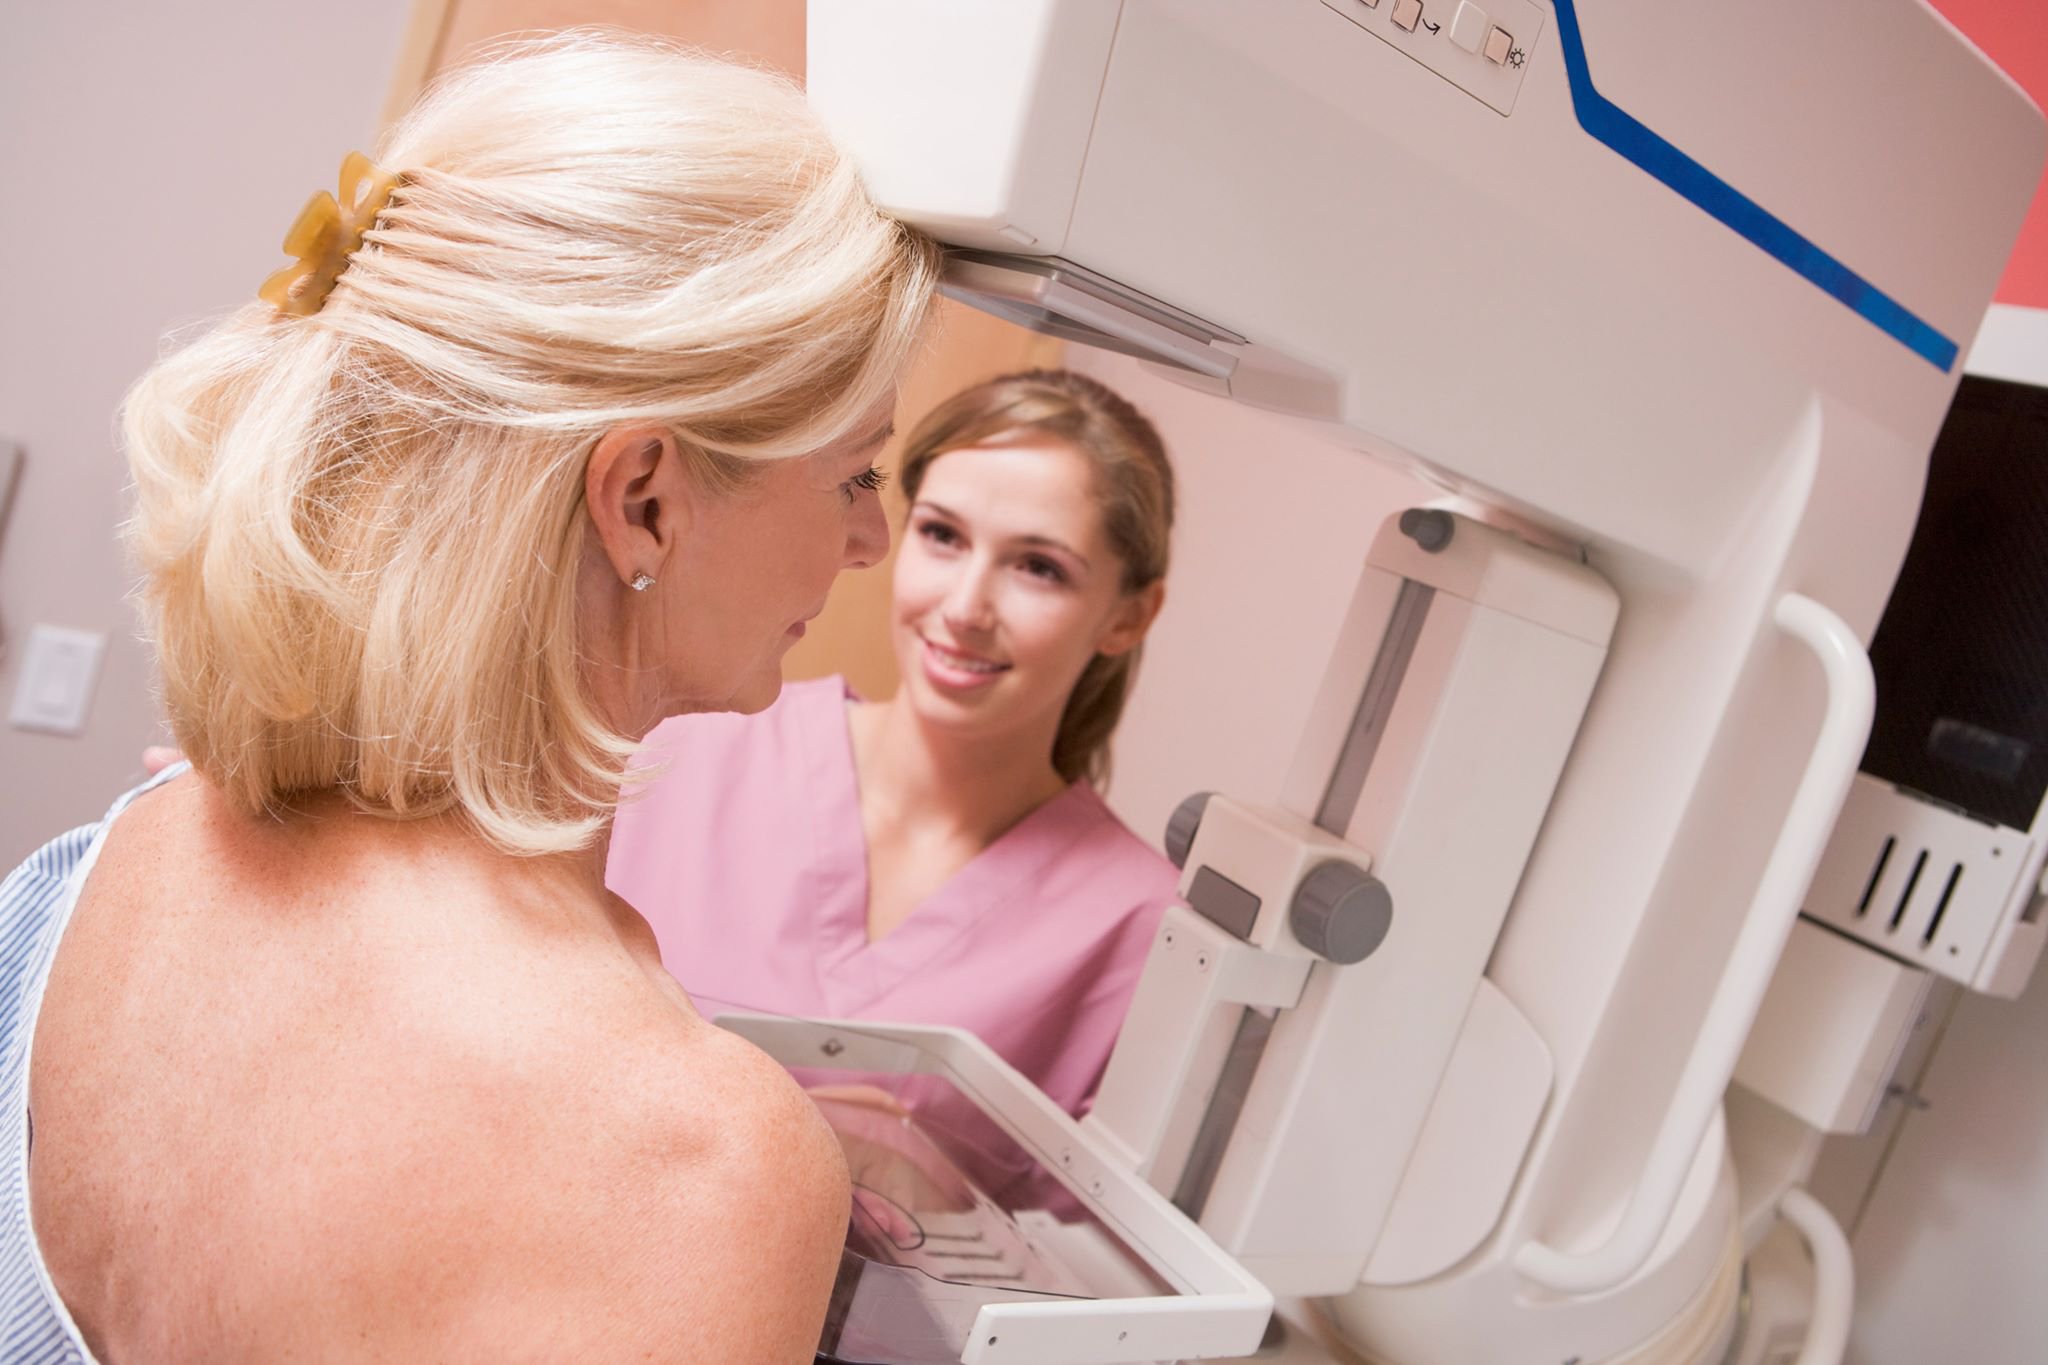 mamography